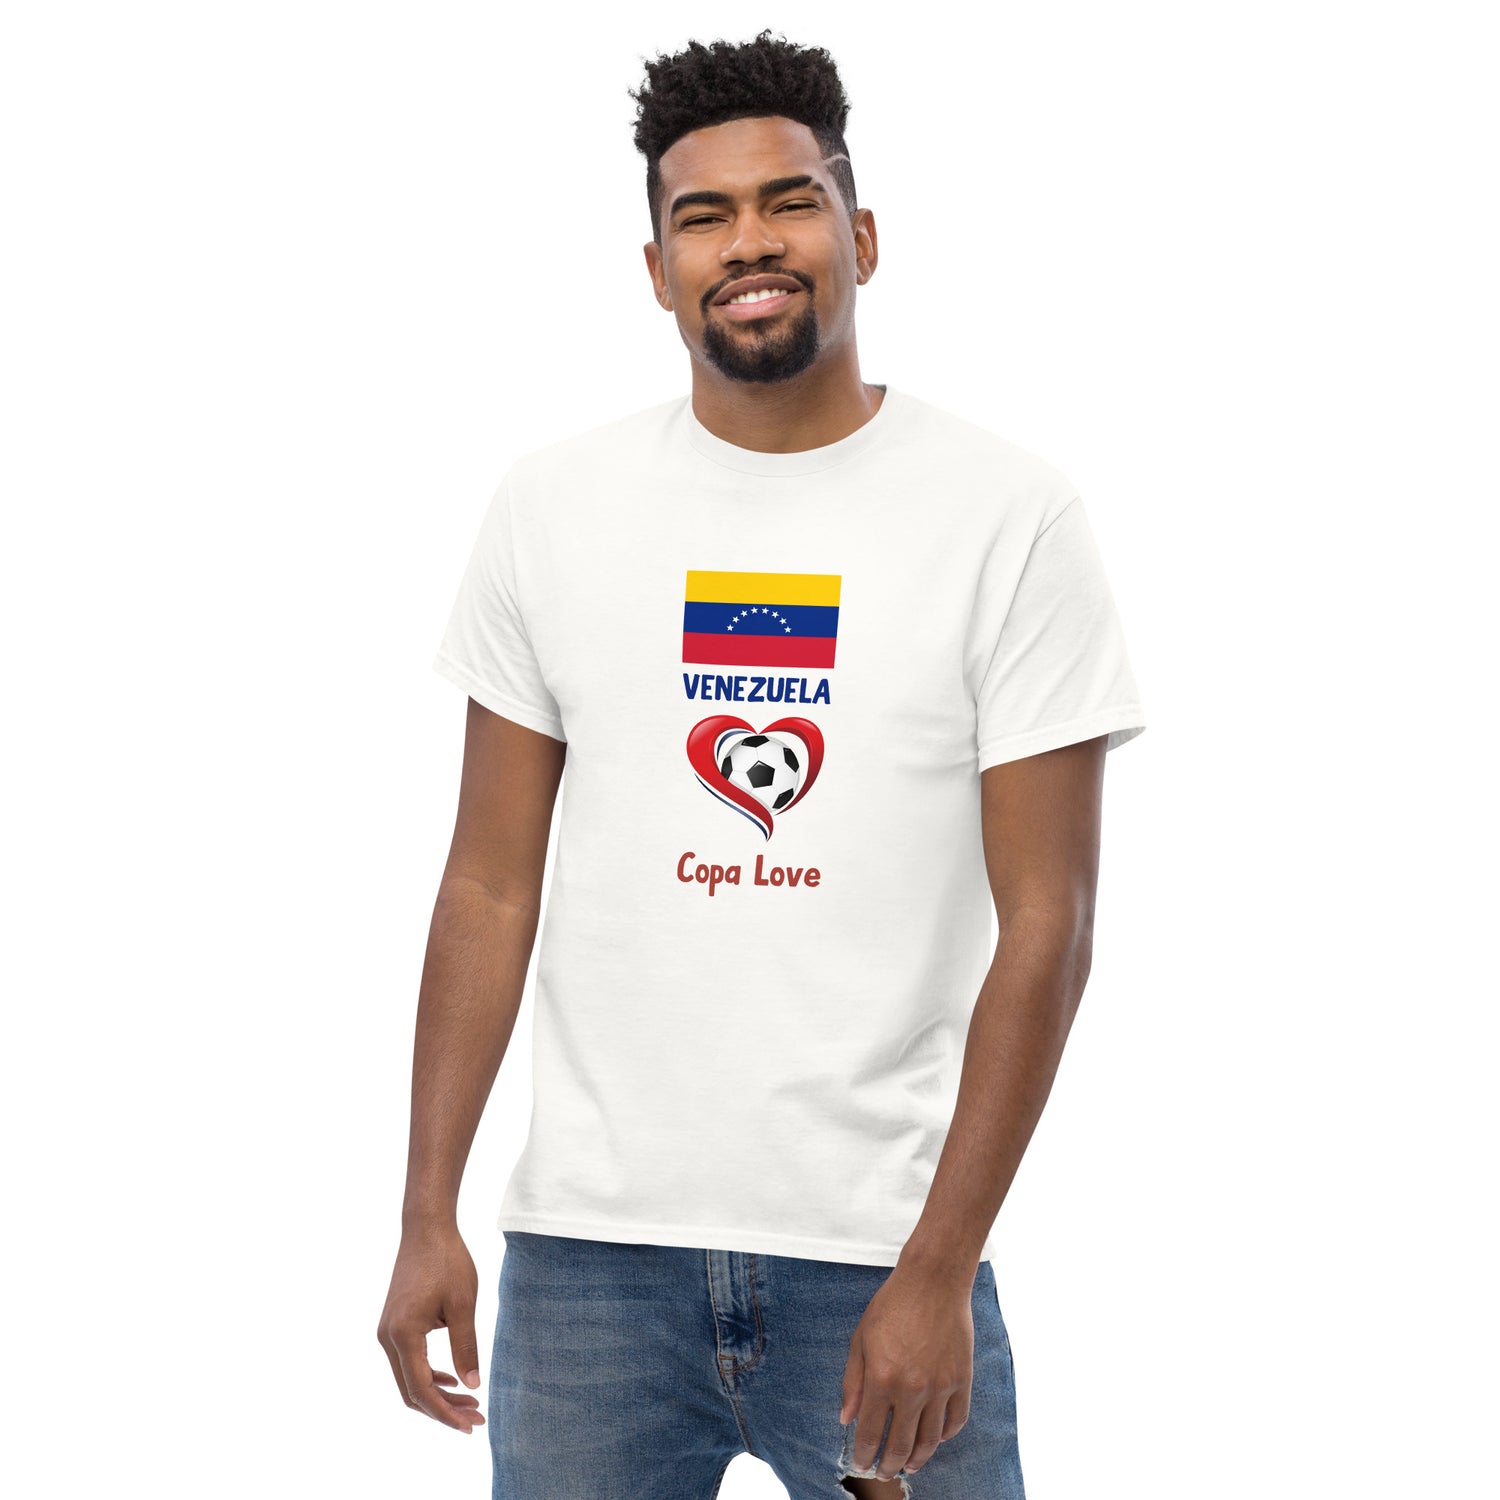 VENEZUELA - Copa Love - Men's classic tee